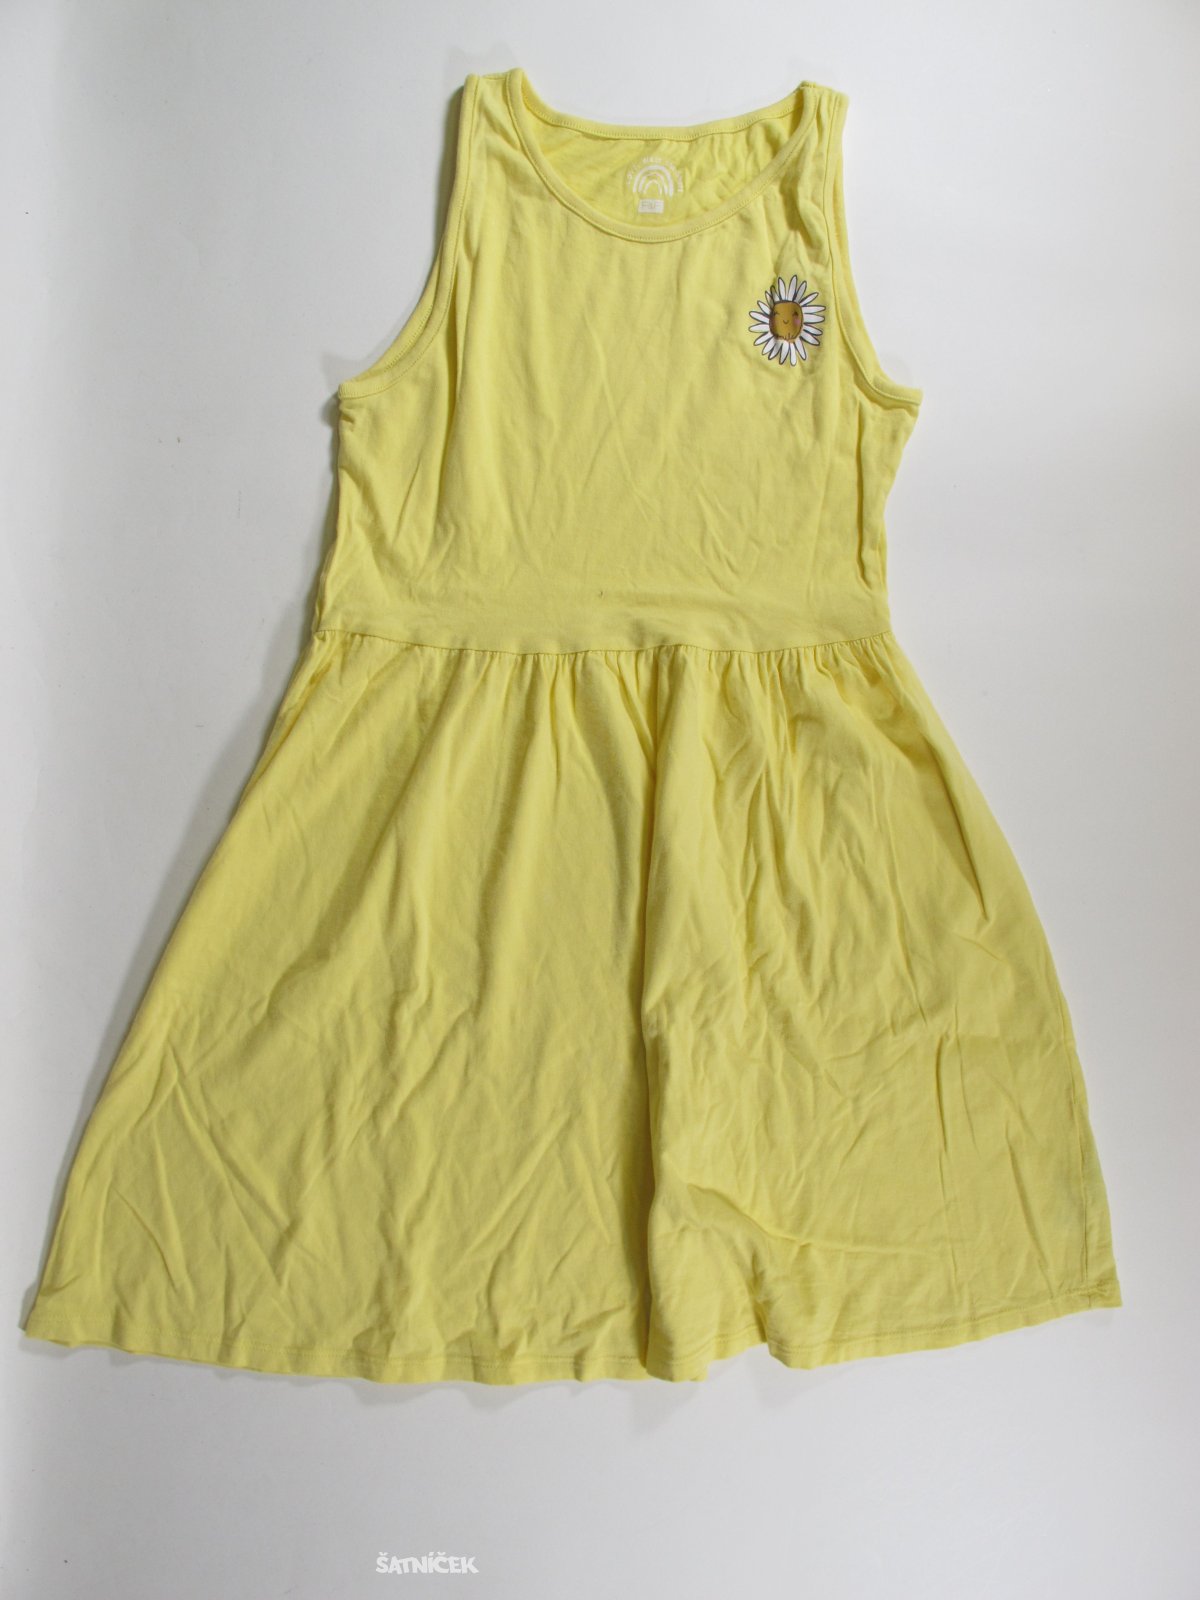 Šaty na ramínka  žluté secondhand